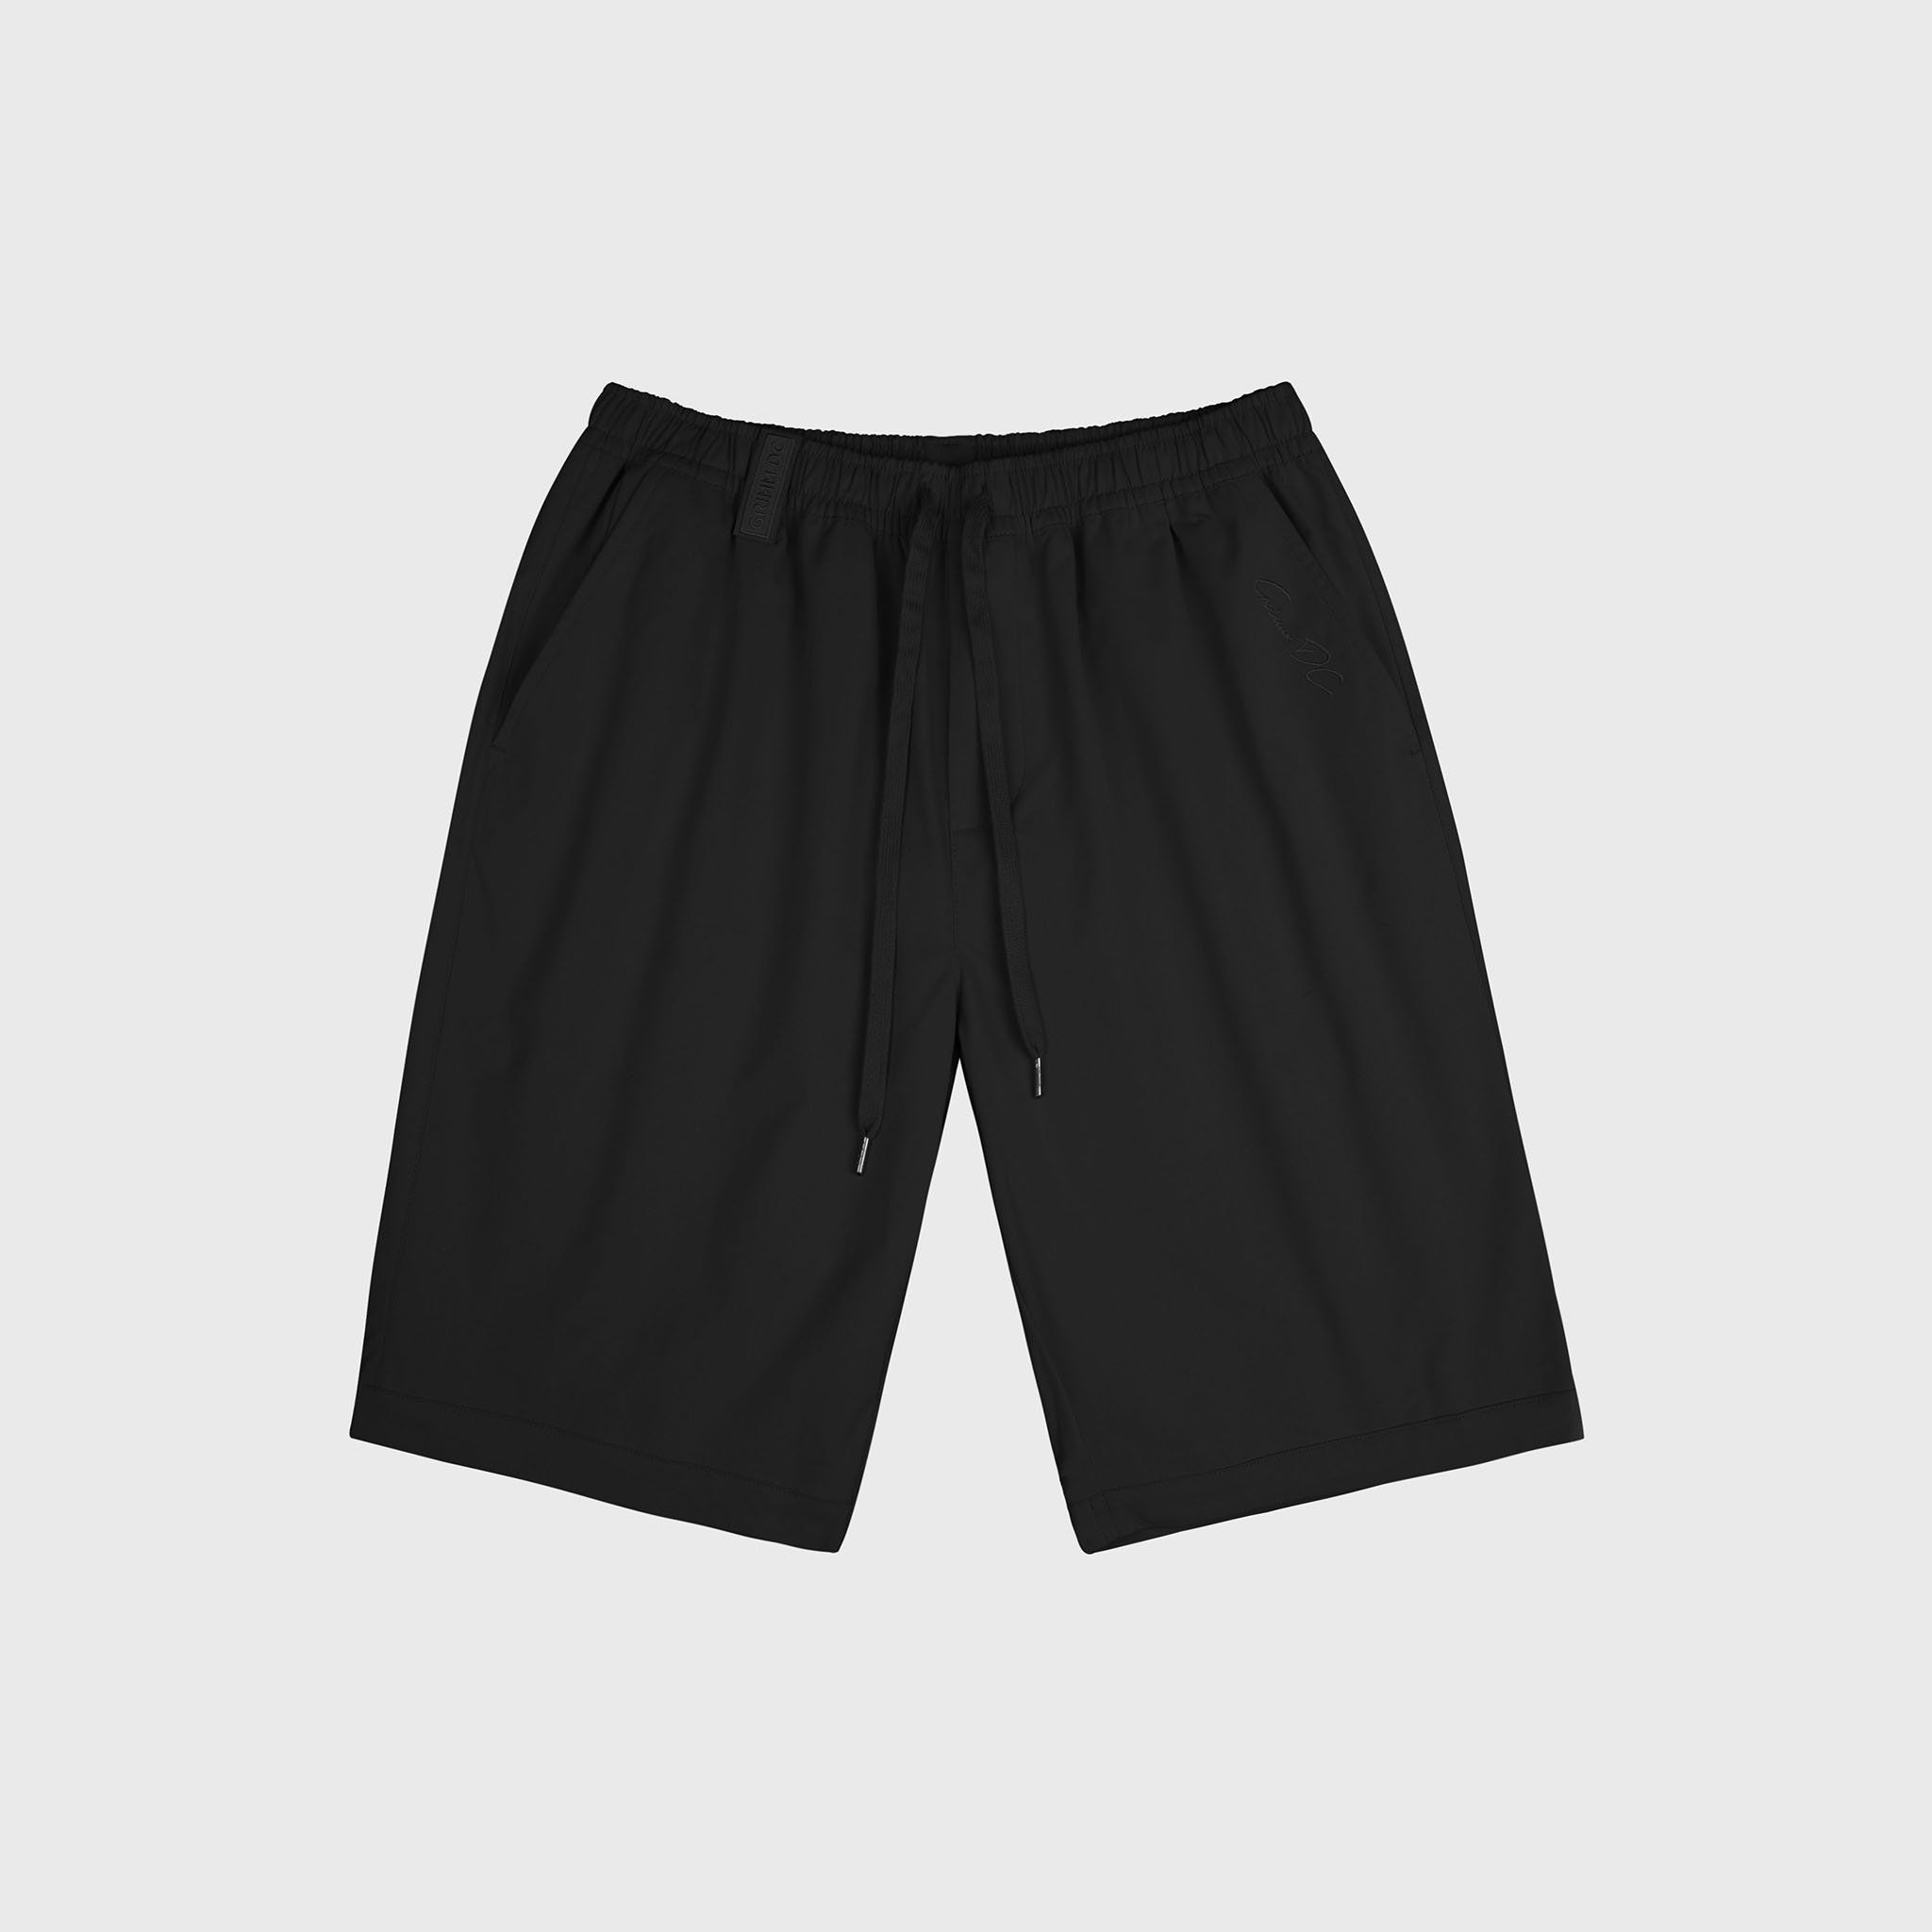 Flex shorts // Black